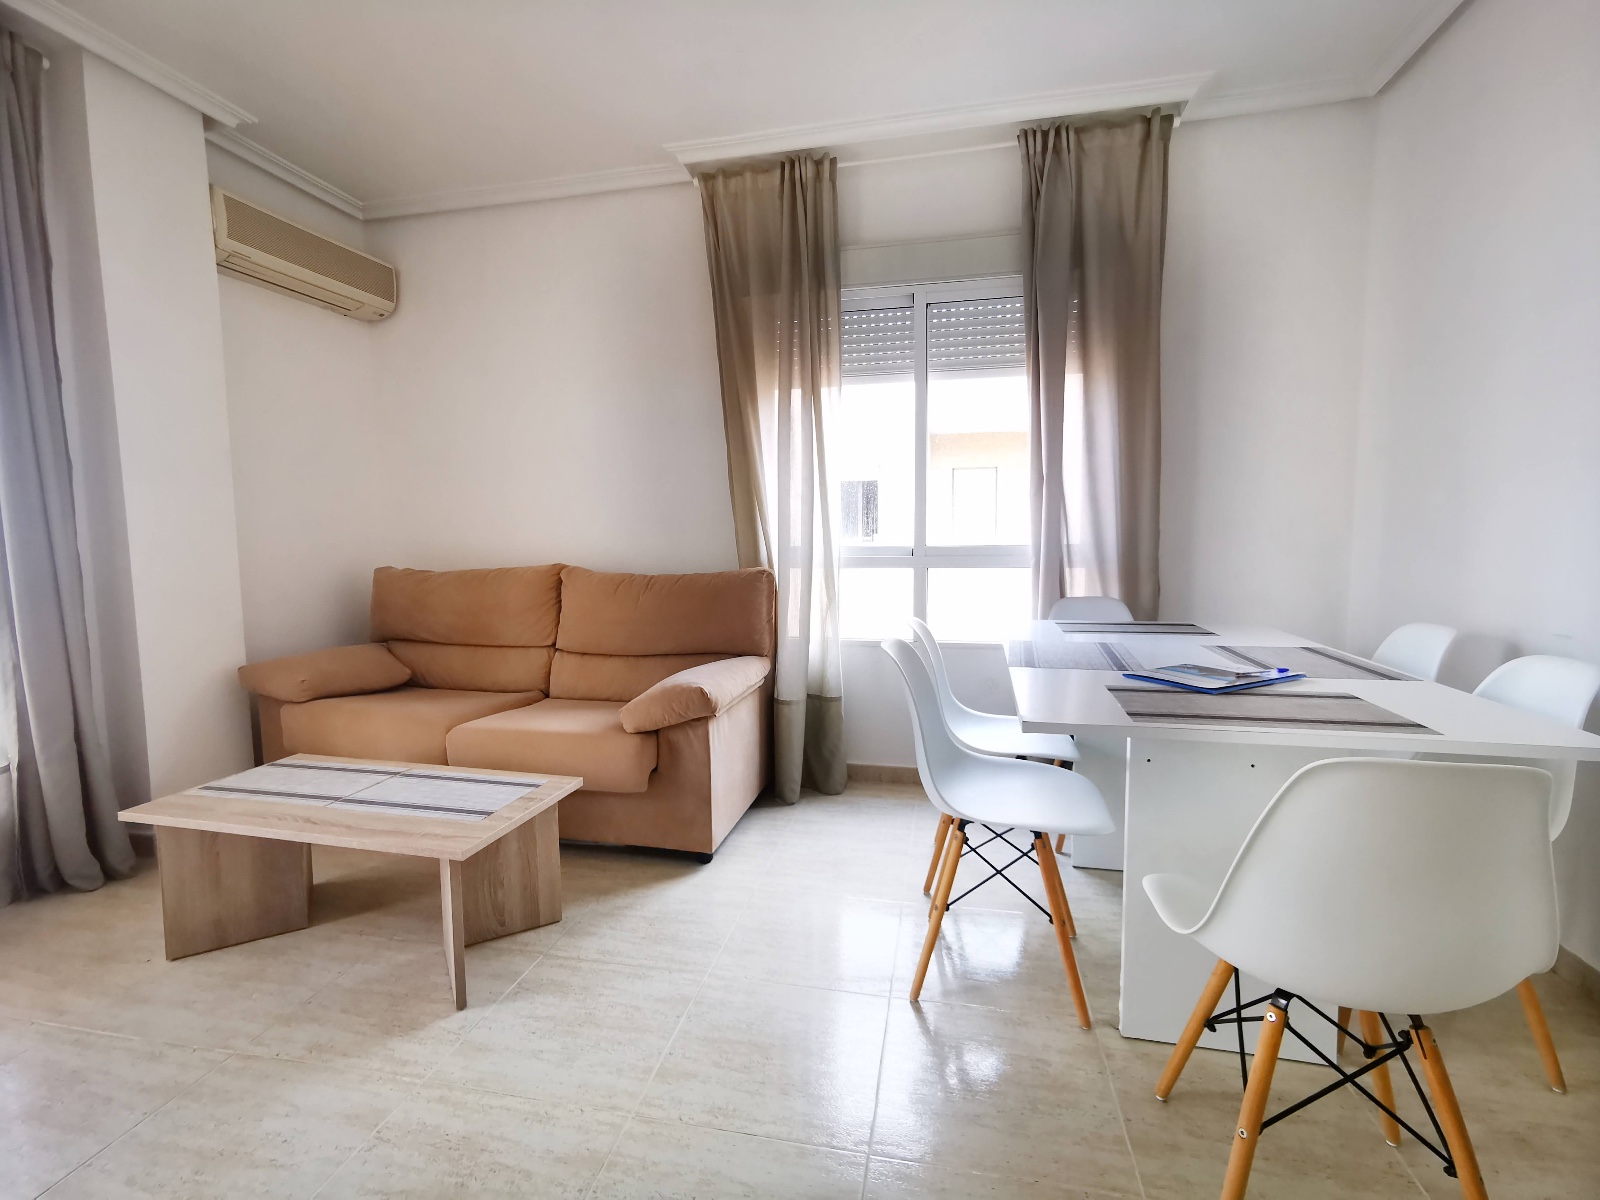 For sale: 2 bedroom apartment / flat in Guardamar del Segura, Costa Blanca